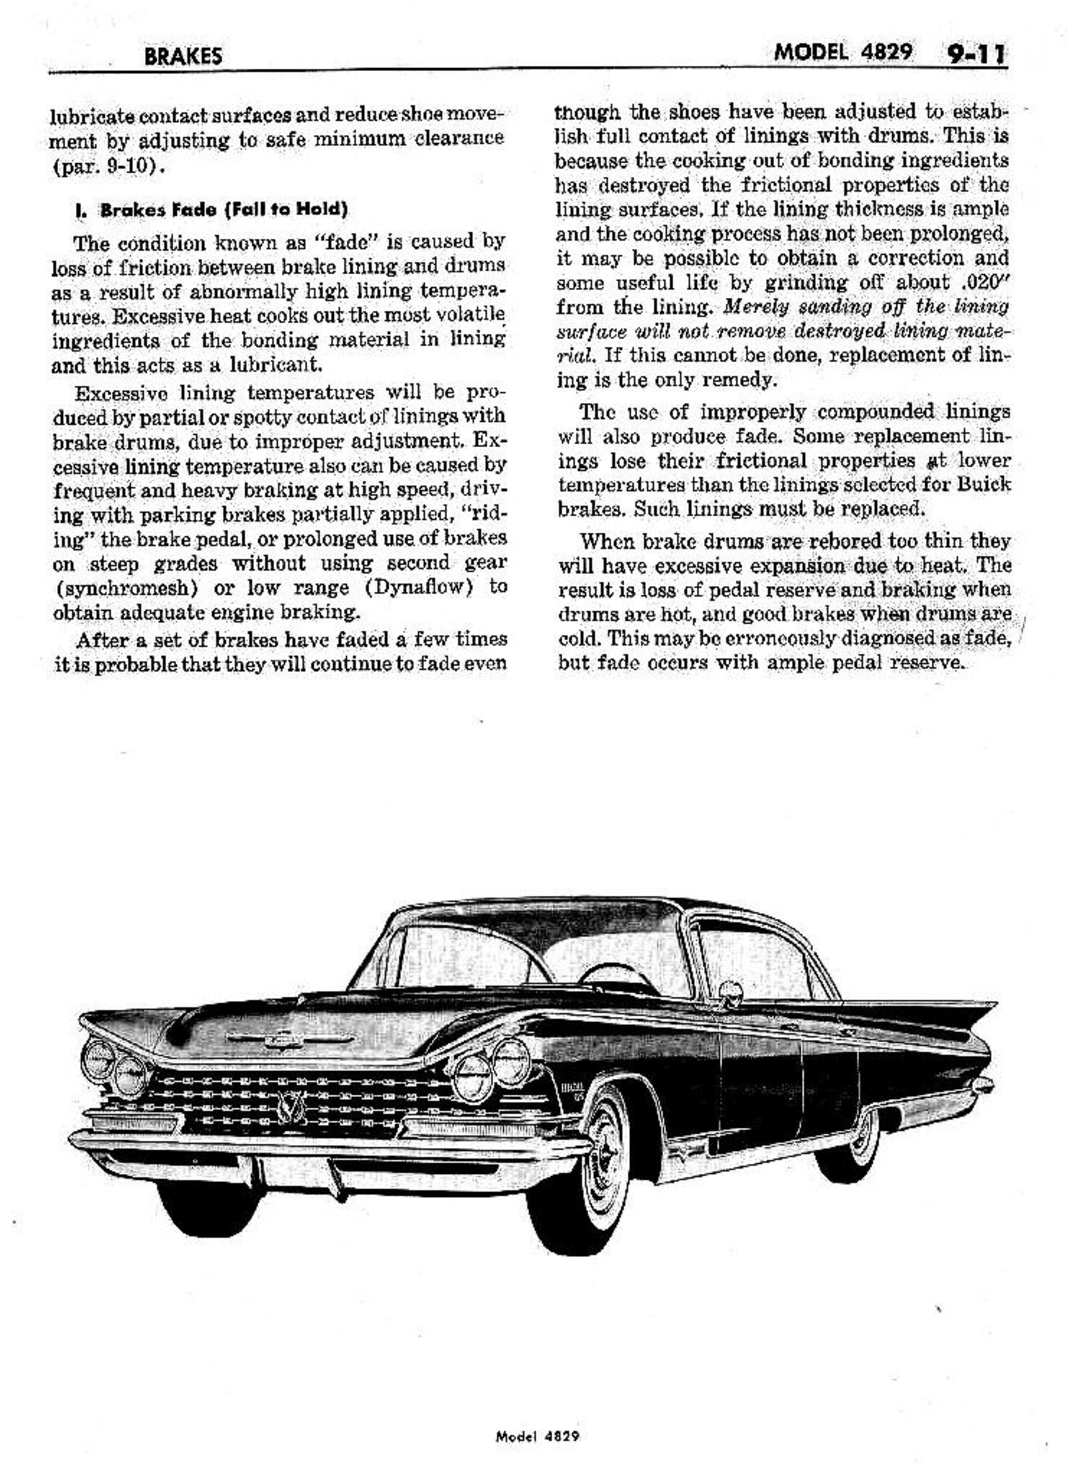 n_10 1959 Buick Shop Manual - Brakes-011-011.jpg